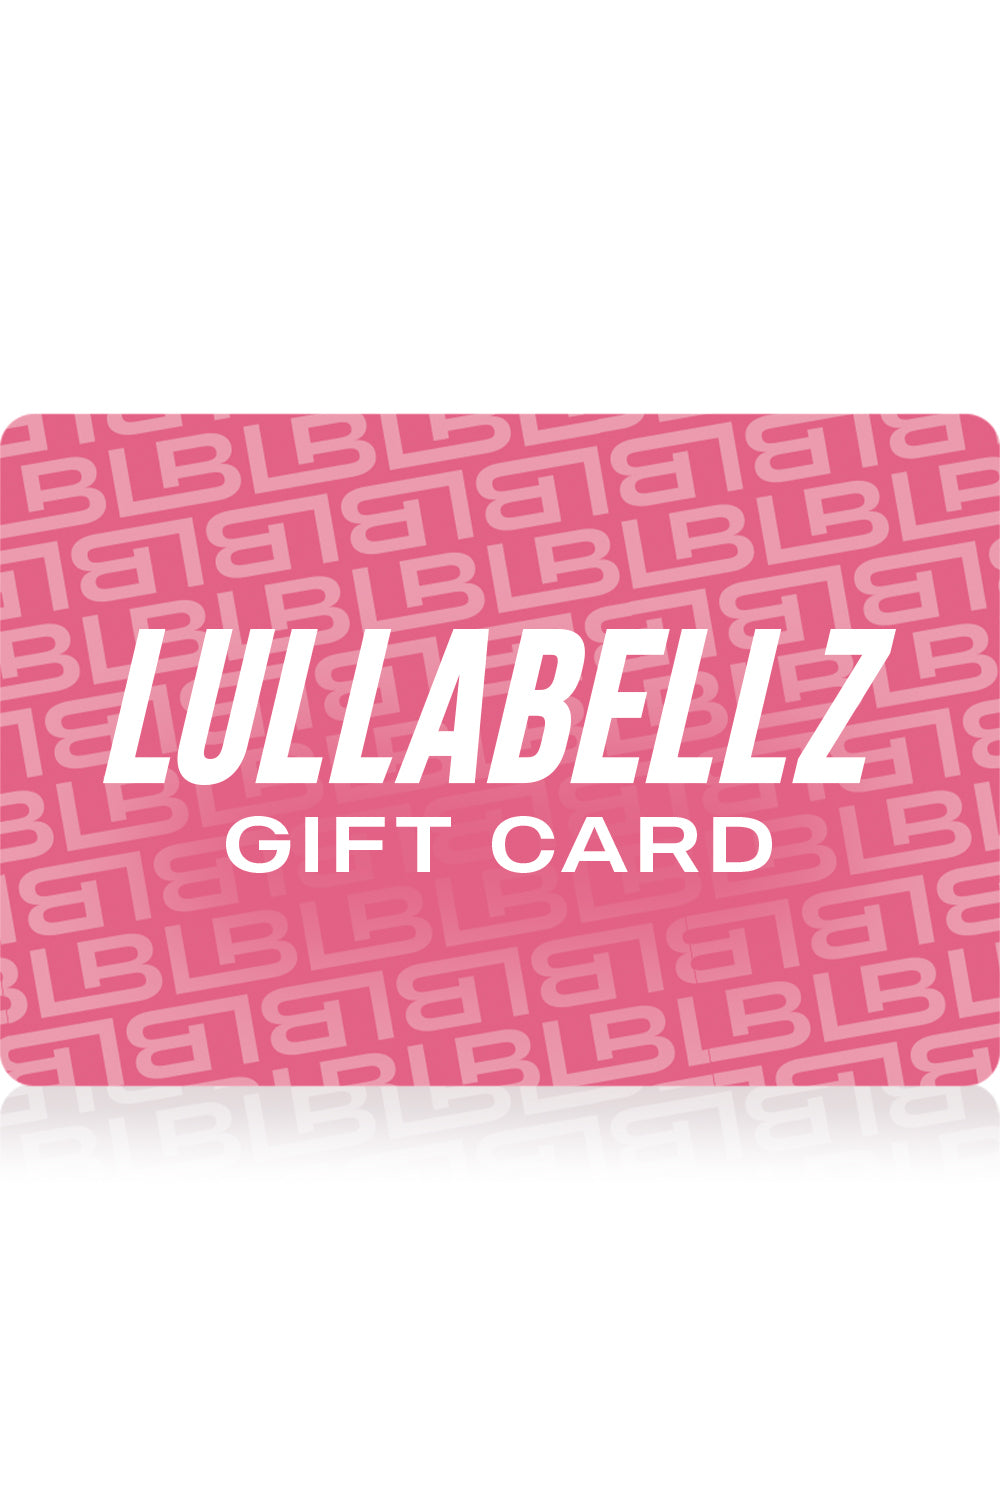 LullaBellz Gift Card